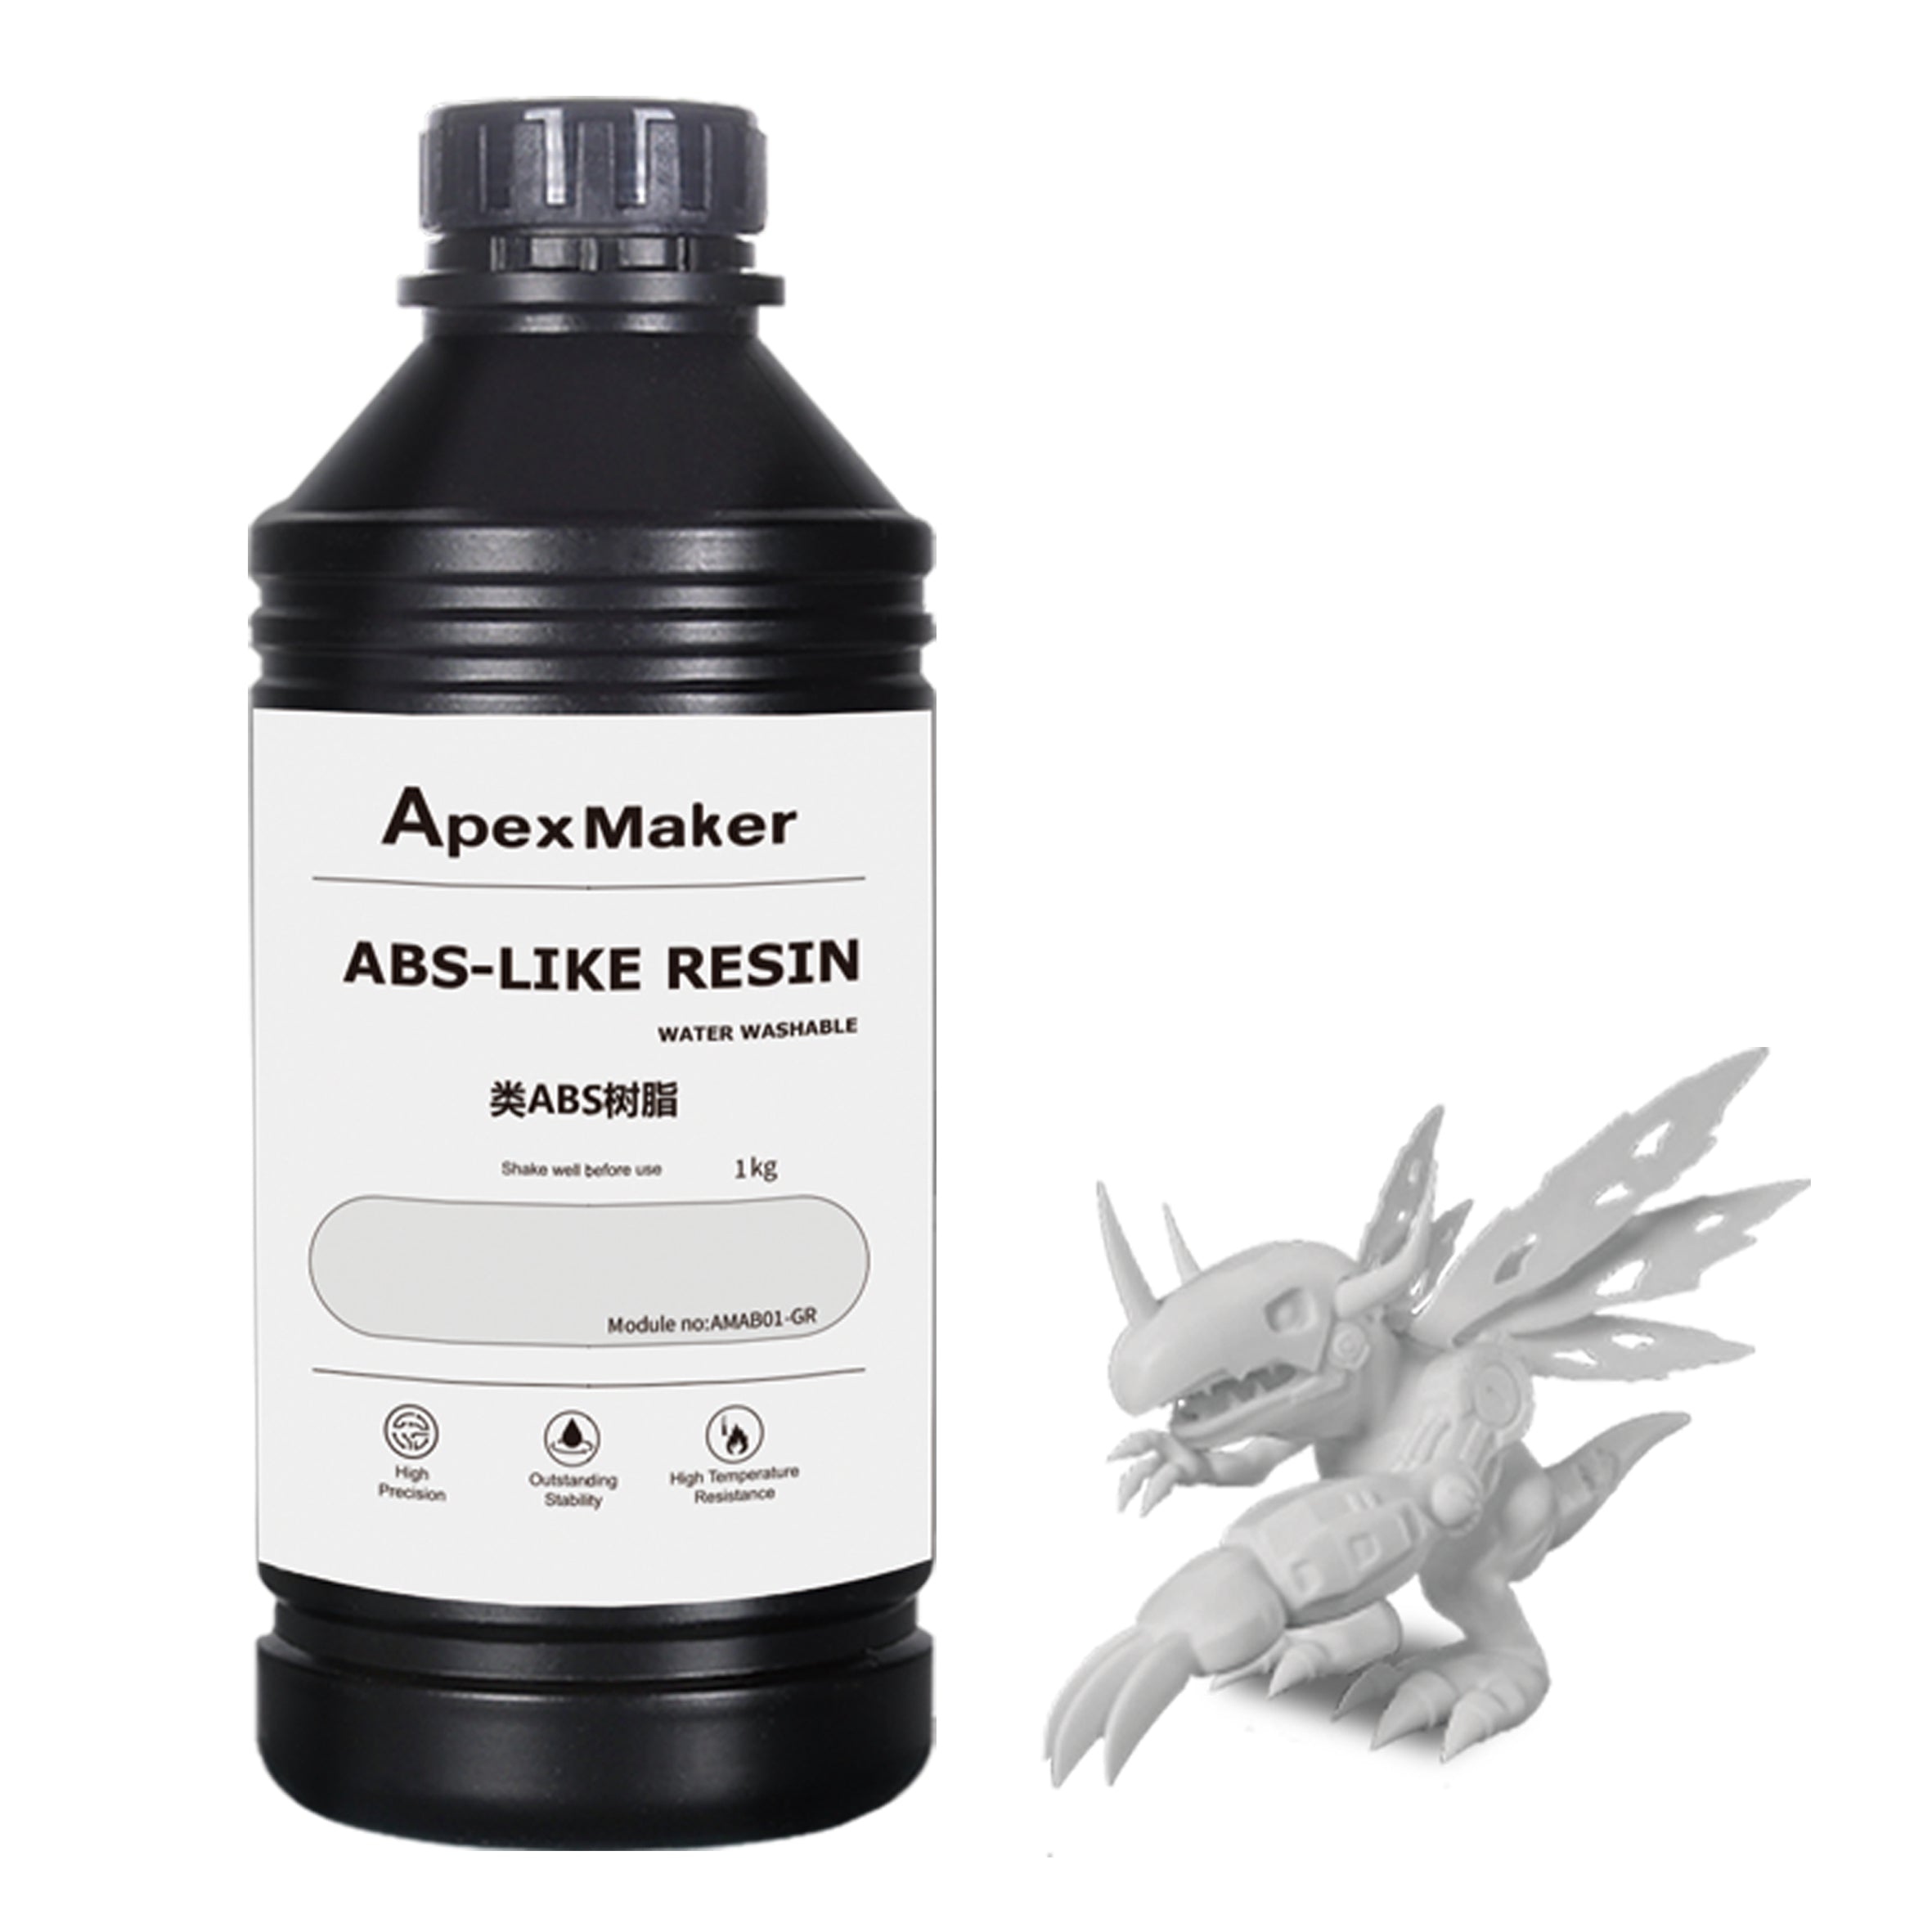 ABS-Like Resin